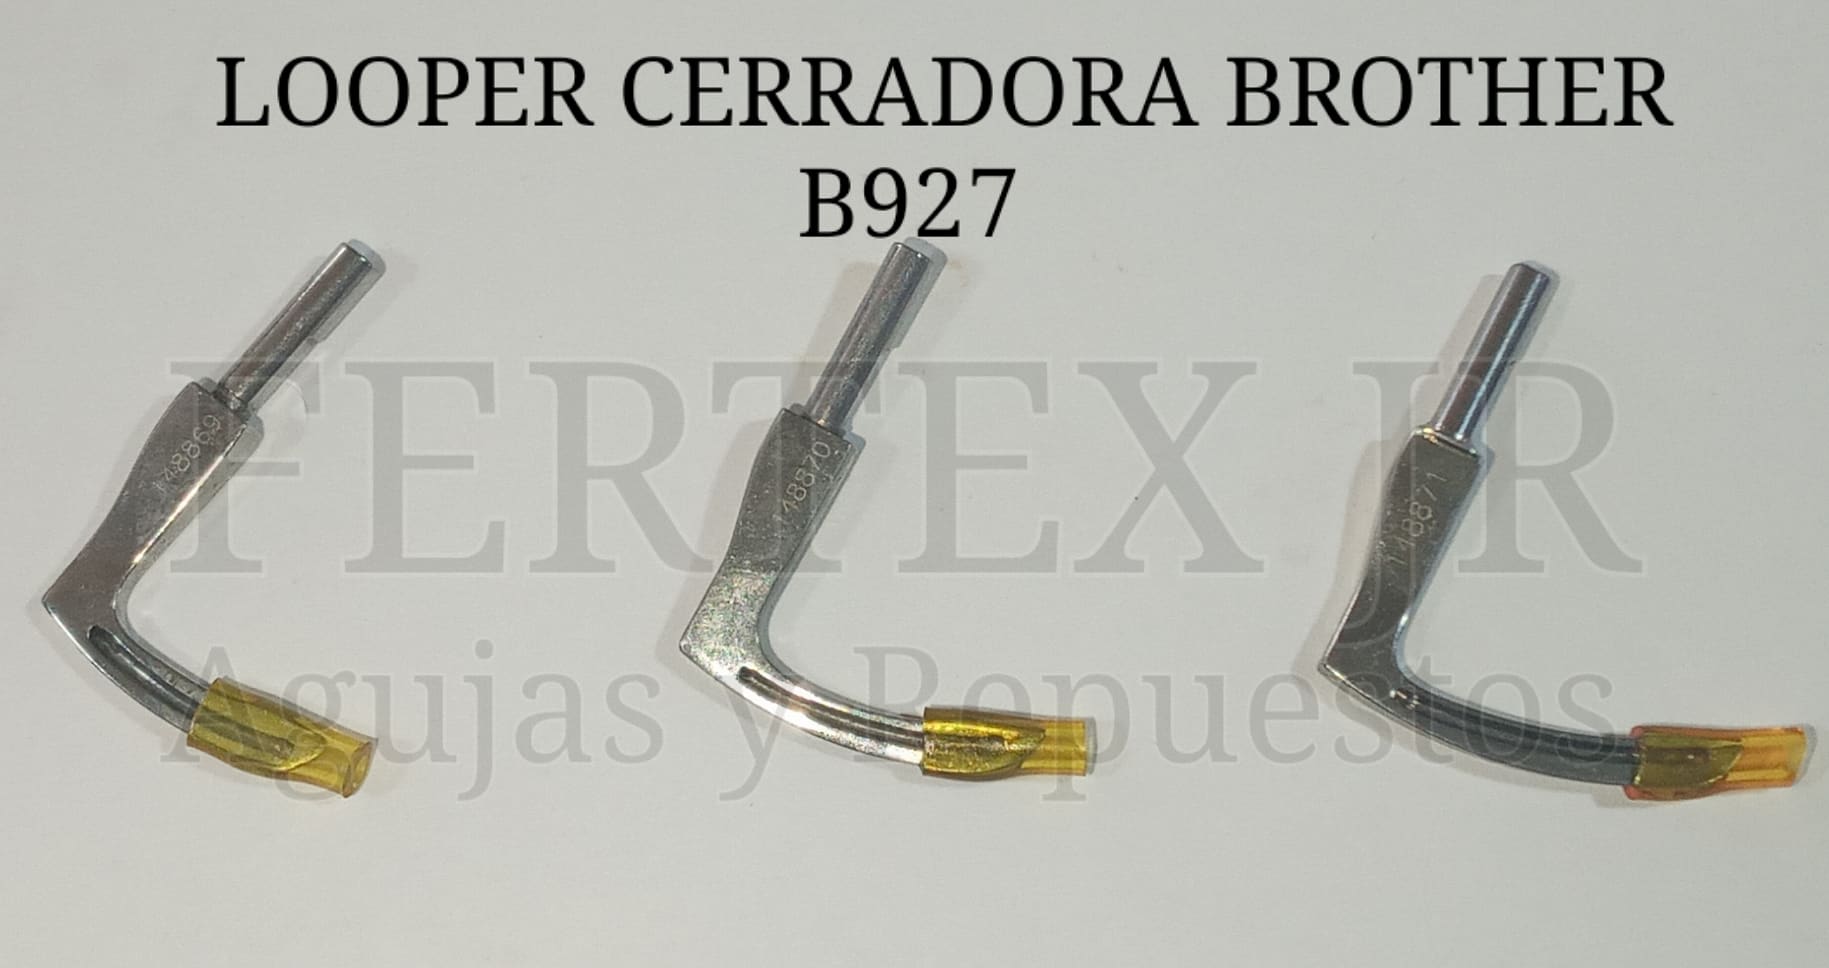 Looper Cerradora Brother B927